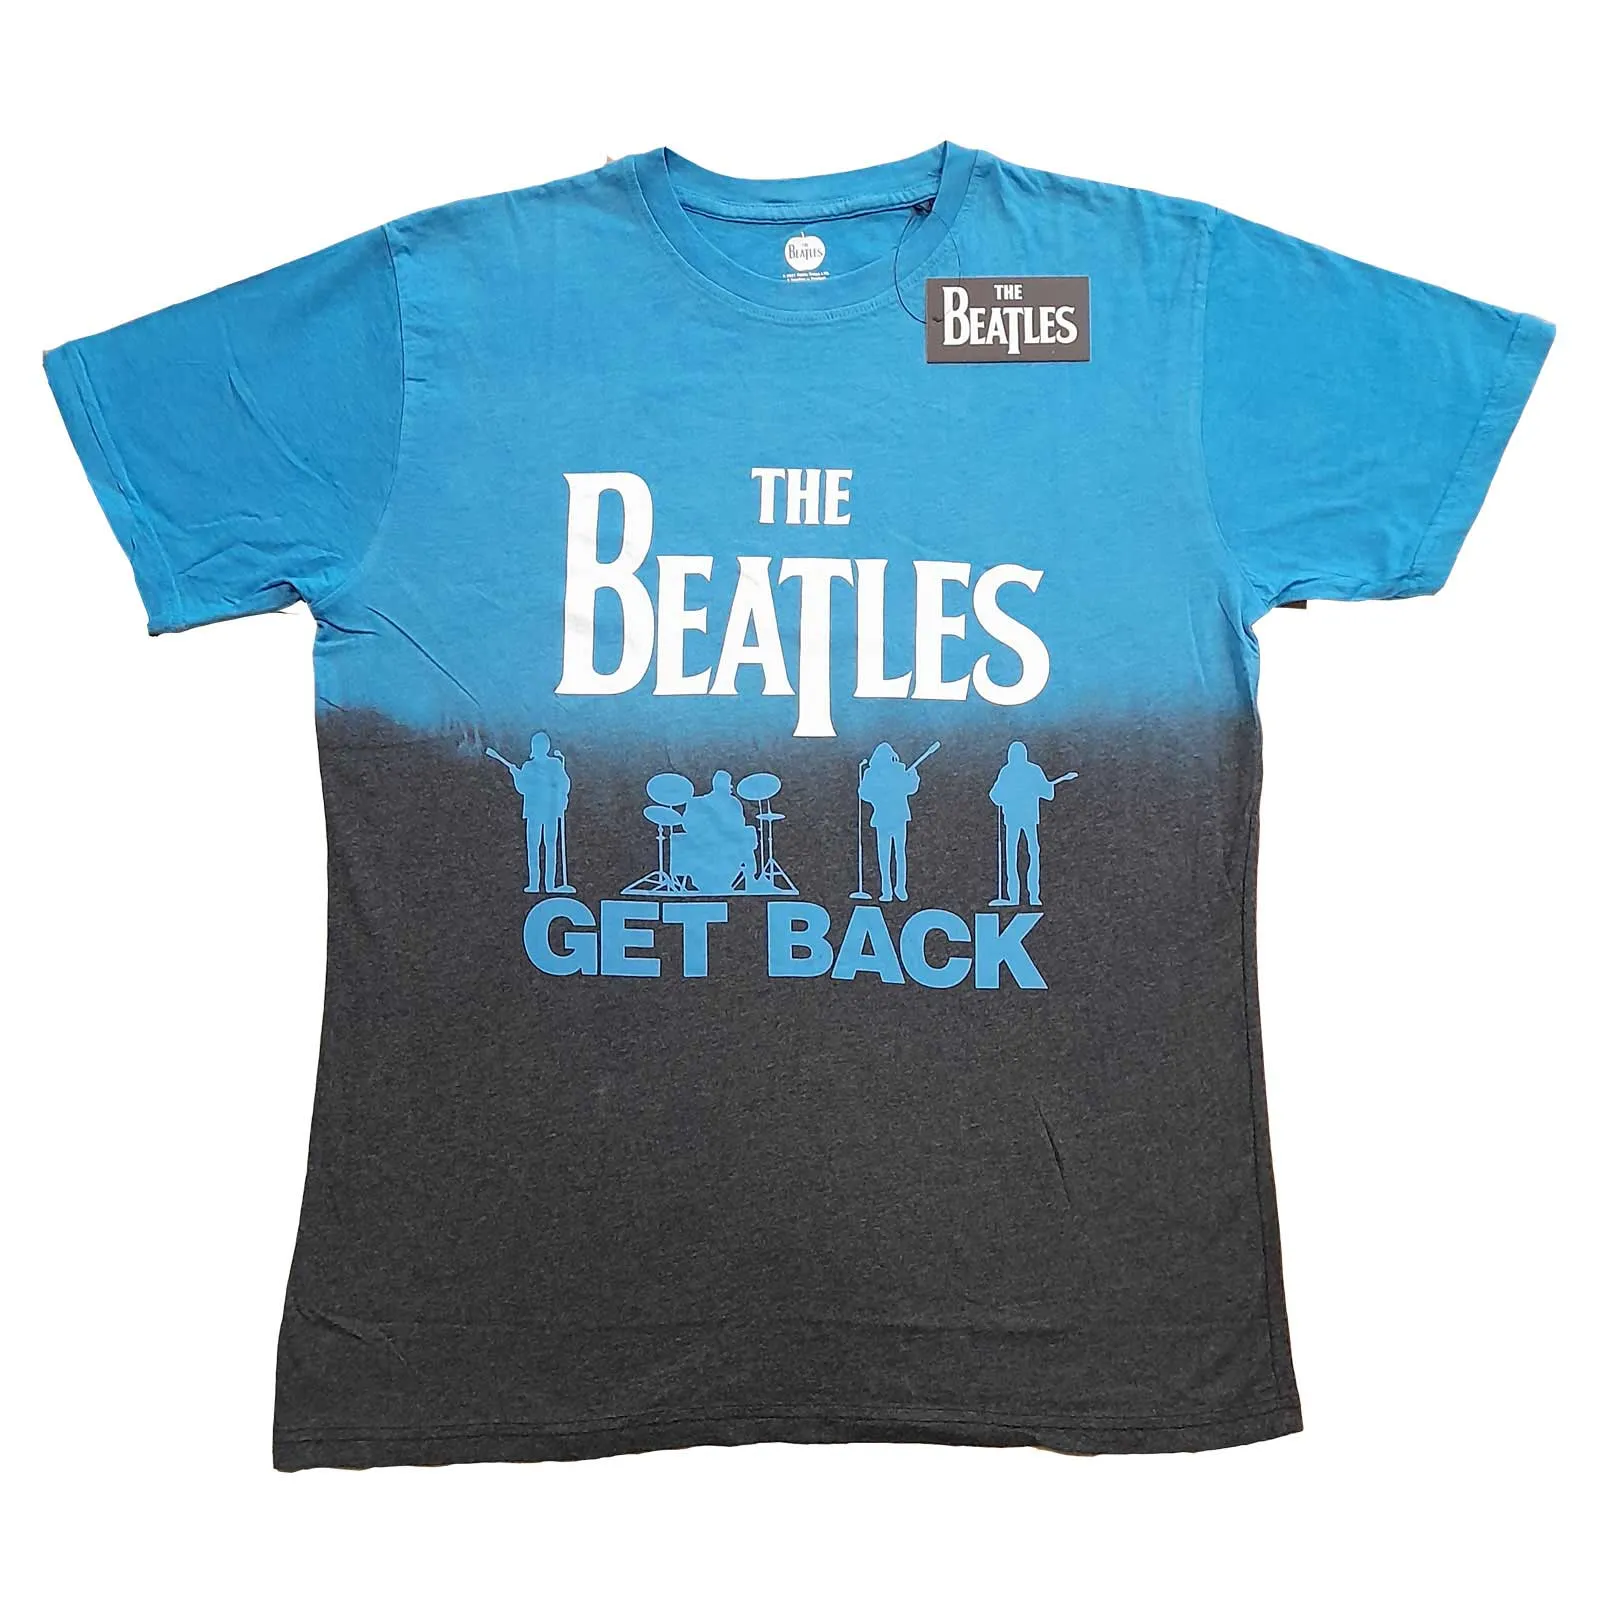 The Beatles - Unisex T-Shirt Get Back Dip Dye, Dye Wash artwork